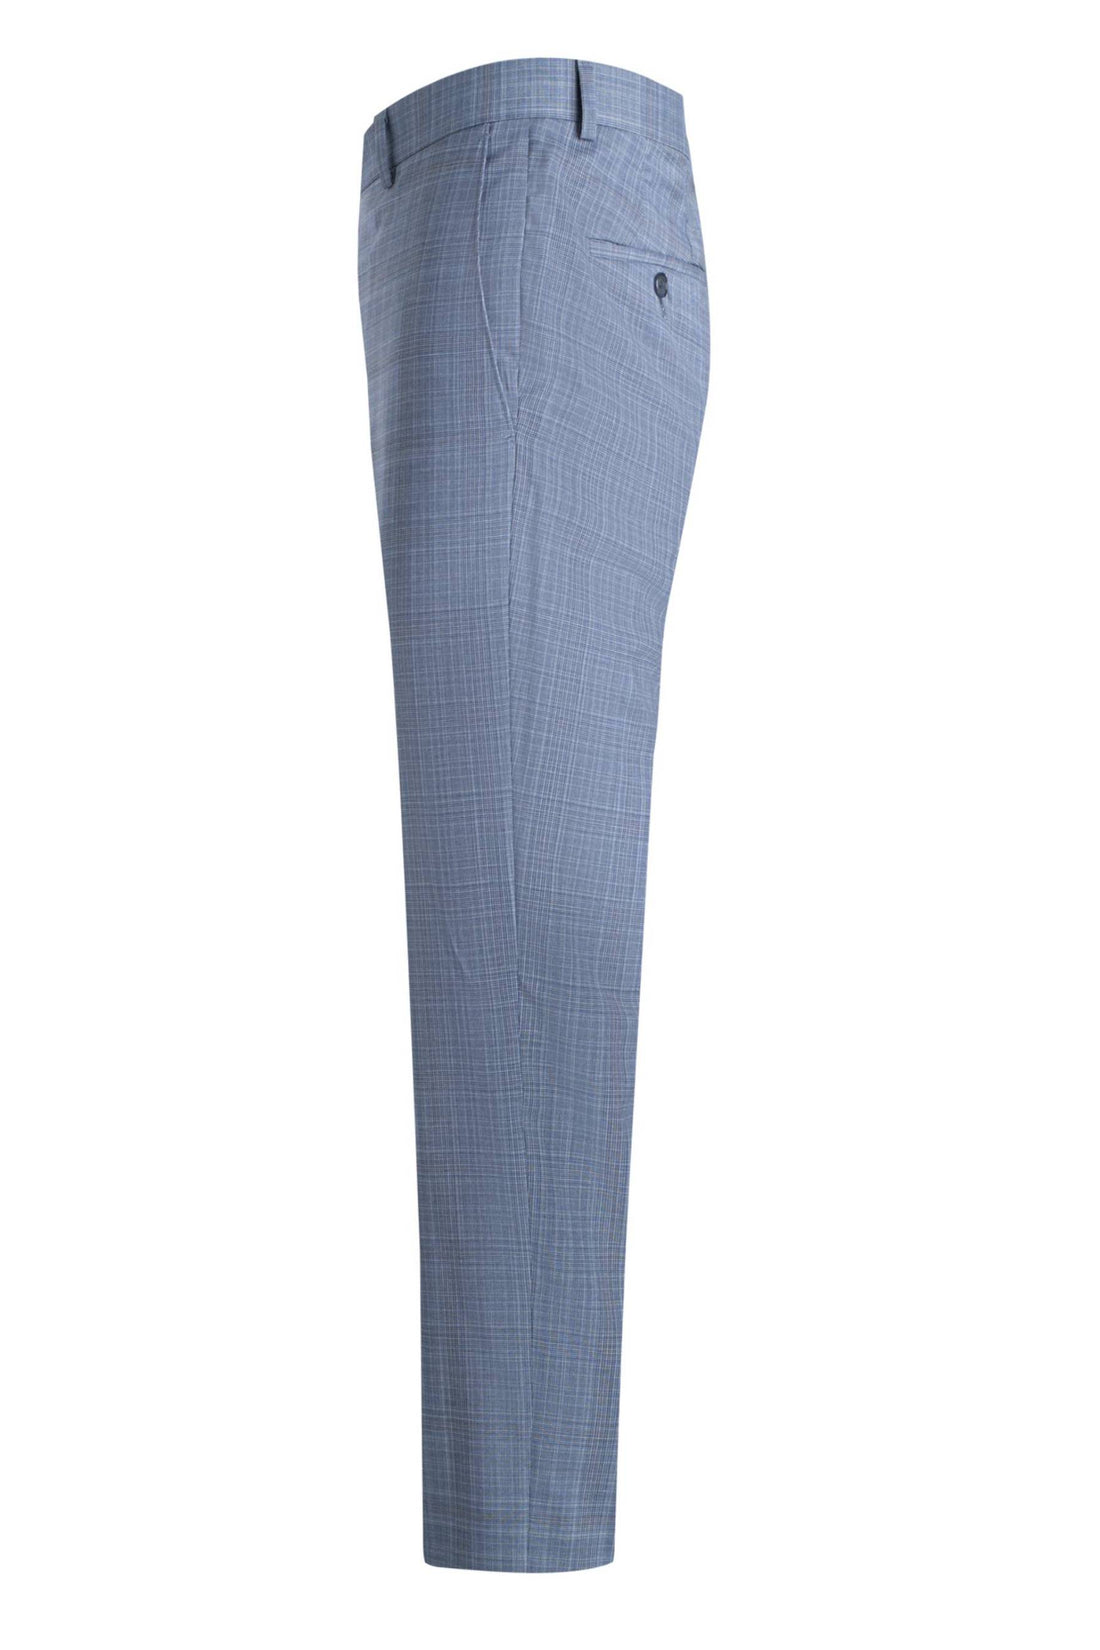 Samuelsohn Slate Blue Plaid Soft Suit Front Side Pant